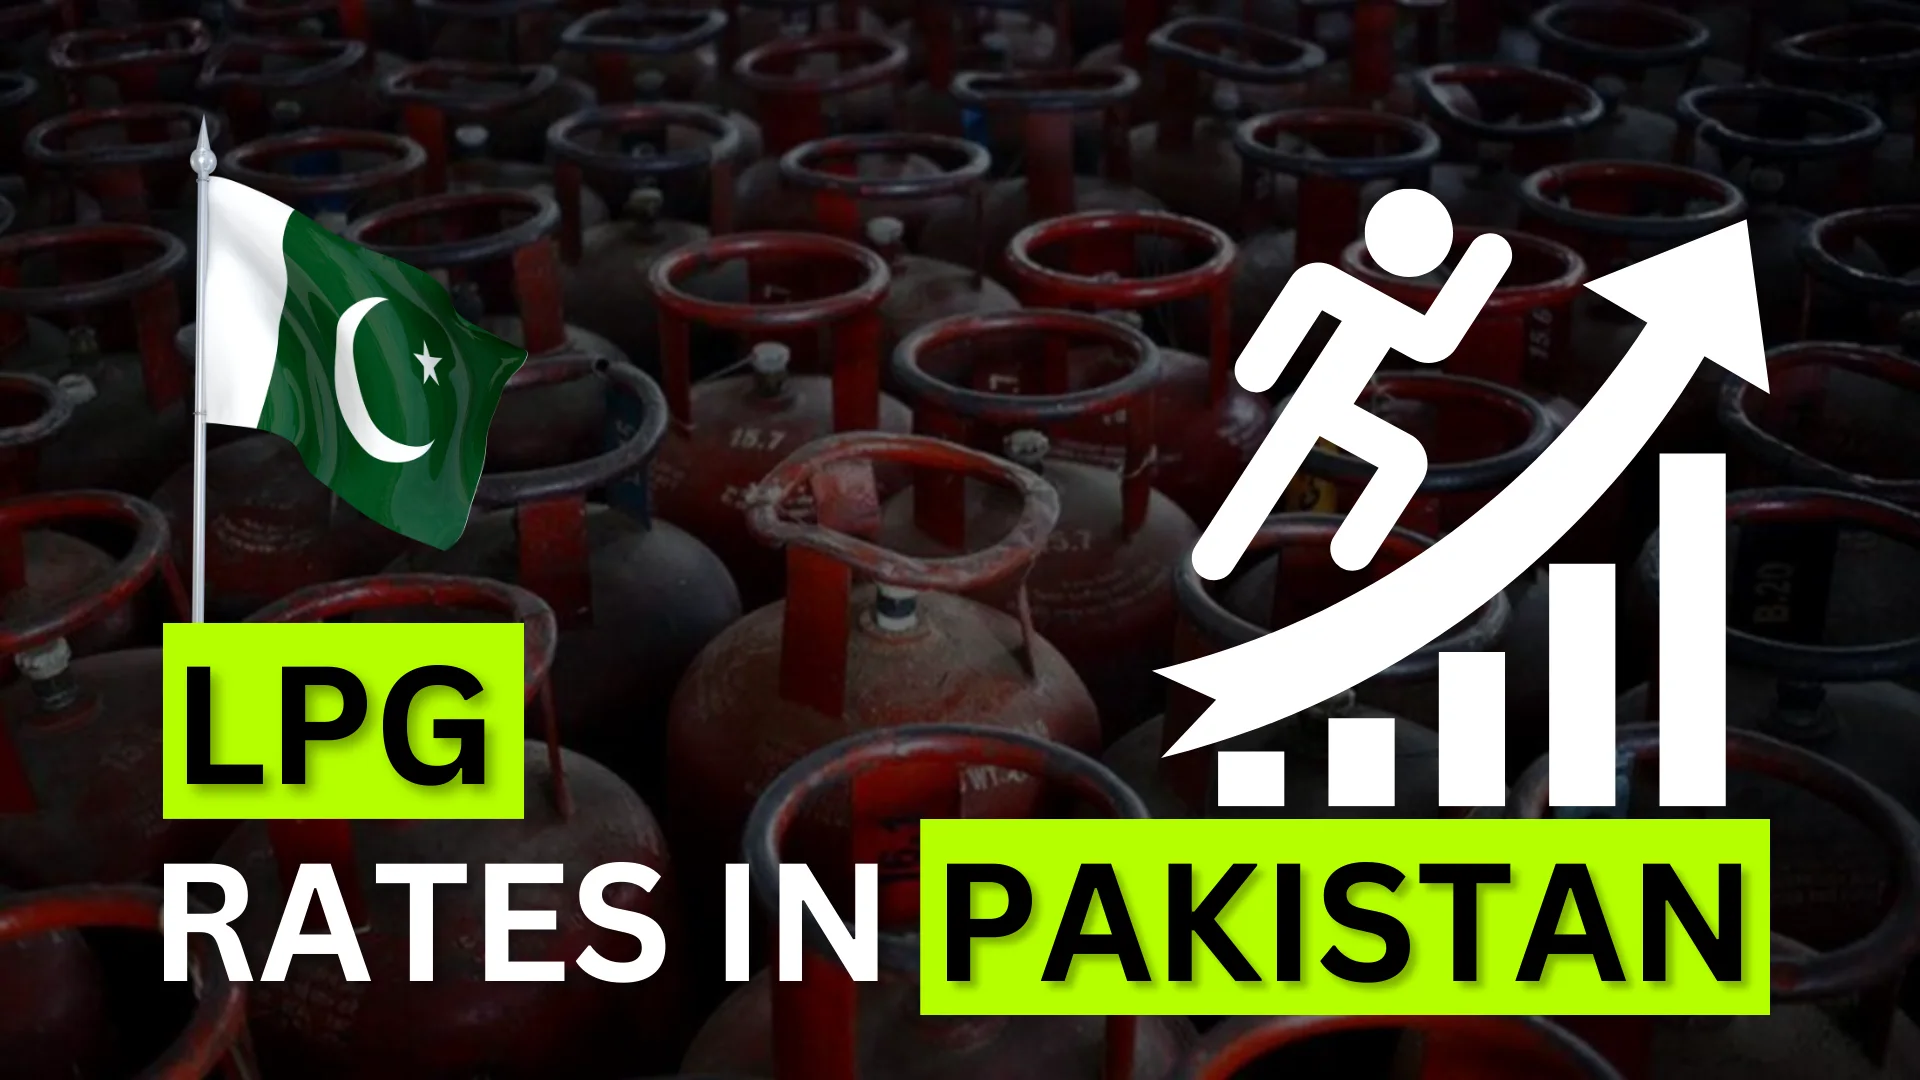 LPG rates in Pakistan